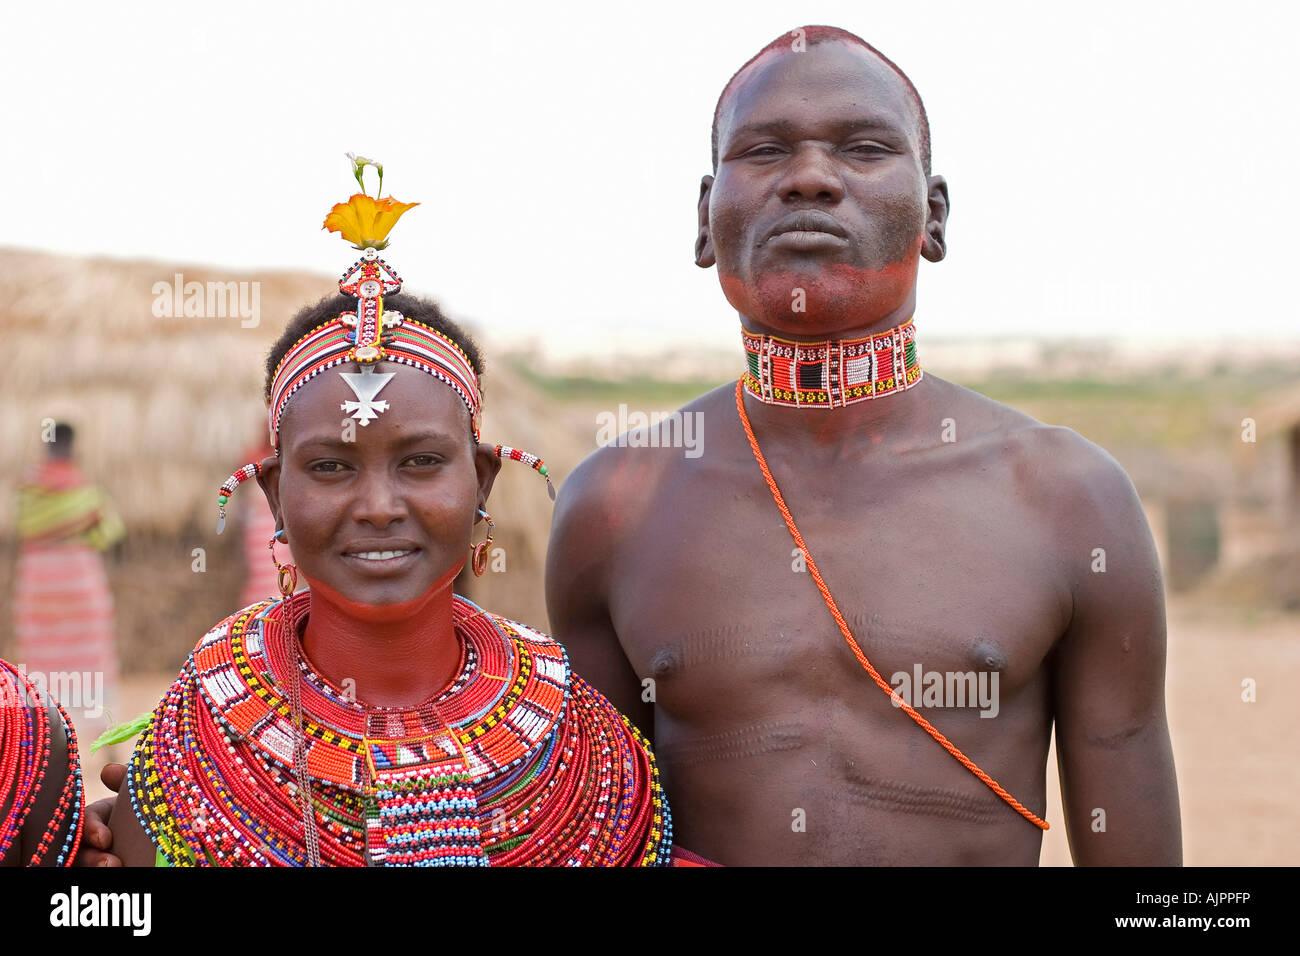 Samburu woman and man in traditional decoration and clothing Stock Photo